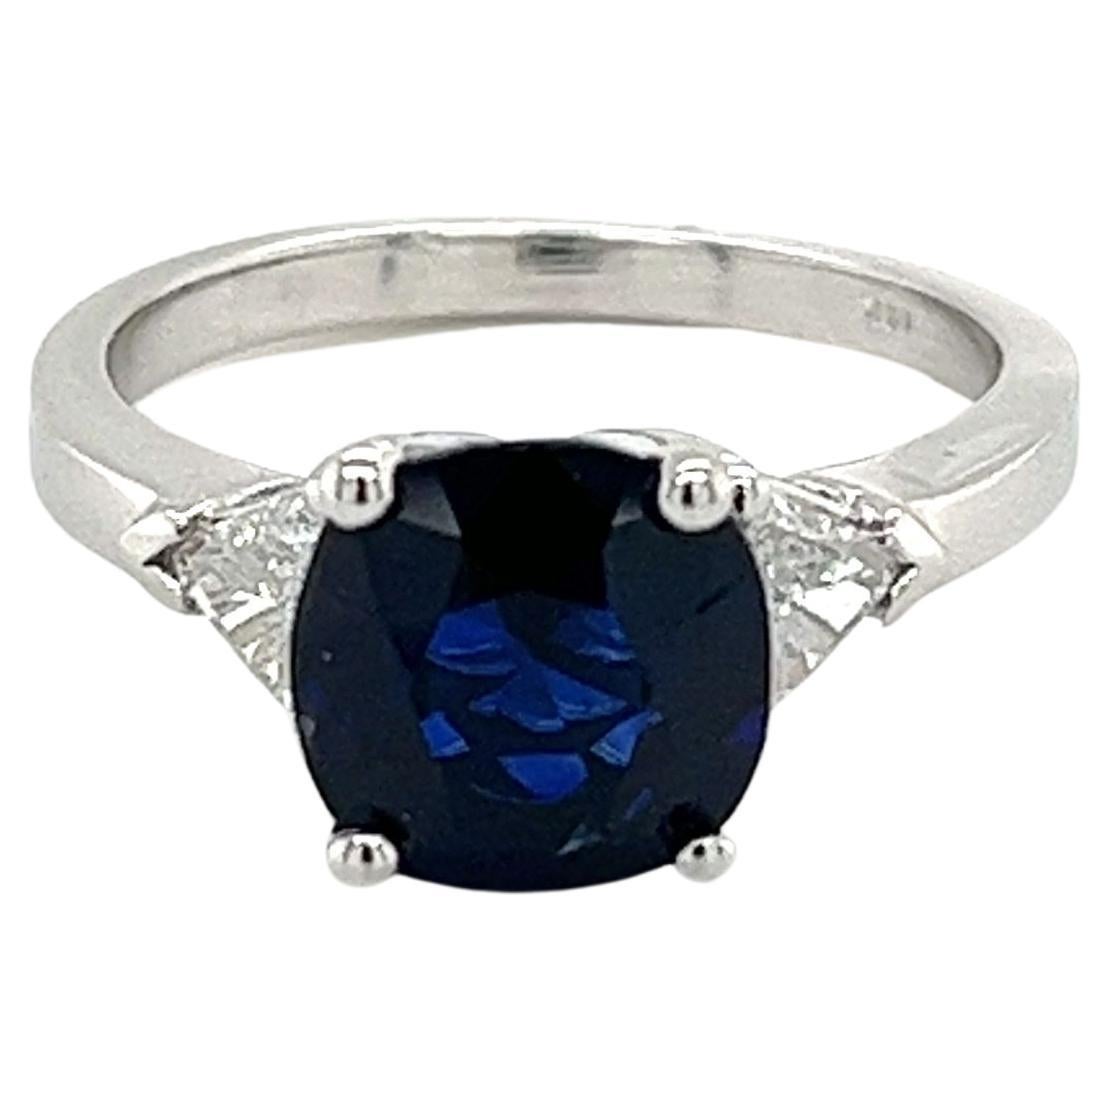 GIA Certified 2.63 Carat Blue Sapphire Ring with Trillion Cut Diamond Sidestones